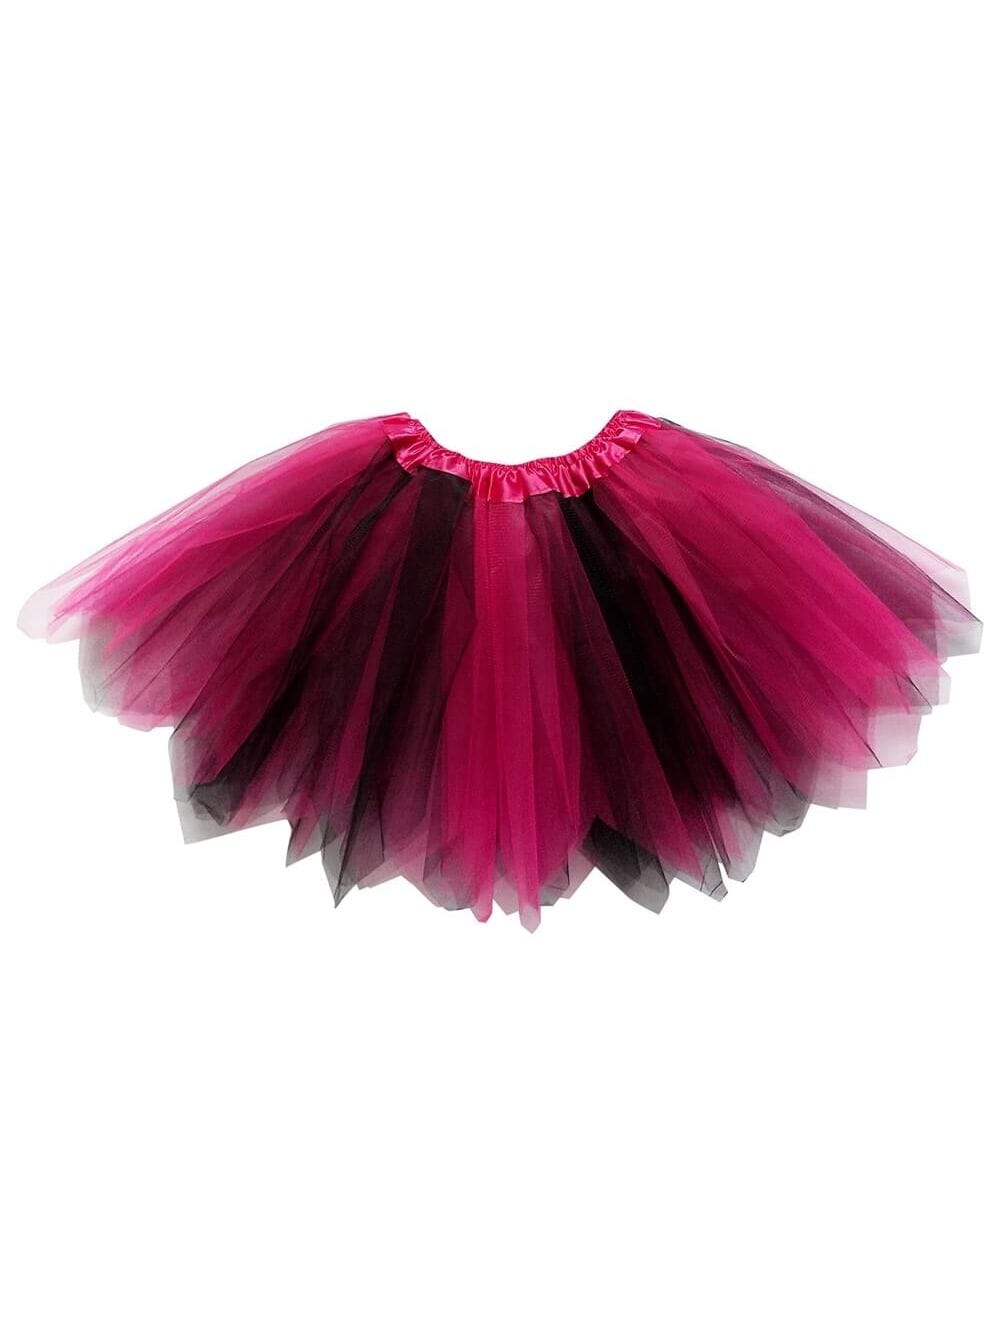 Hot Pink & Black Fairy Costume Pixie Tutu Skirt for Kids, Adults, Plus - Sydney So Sweet